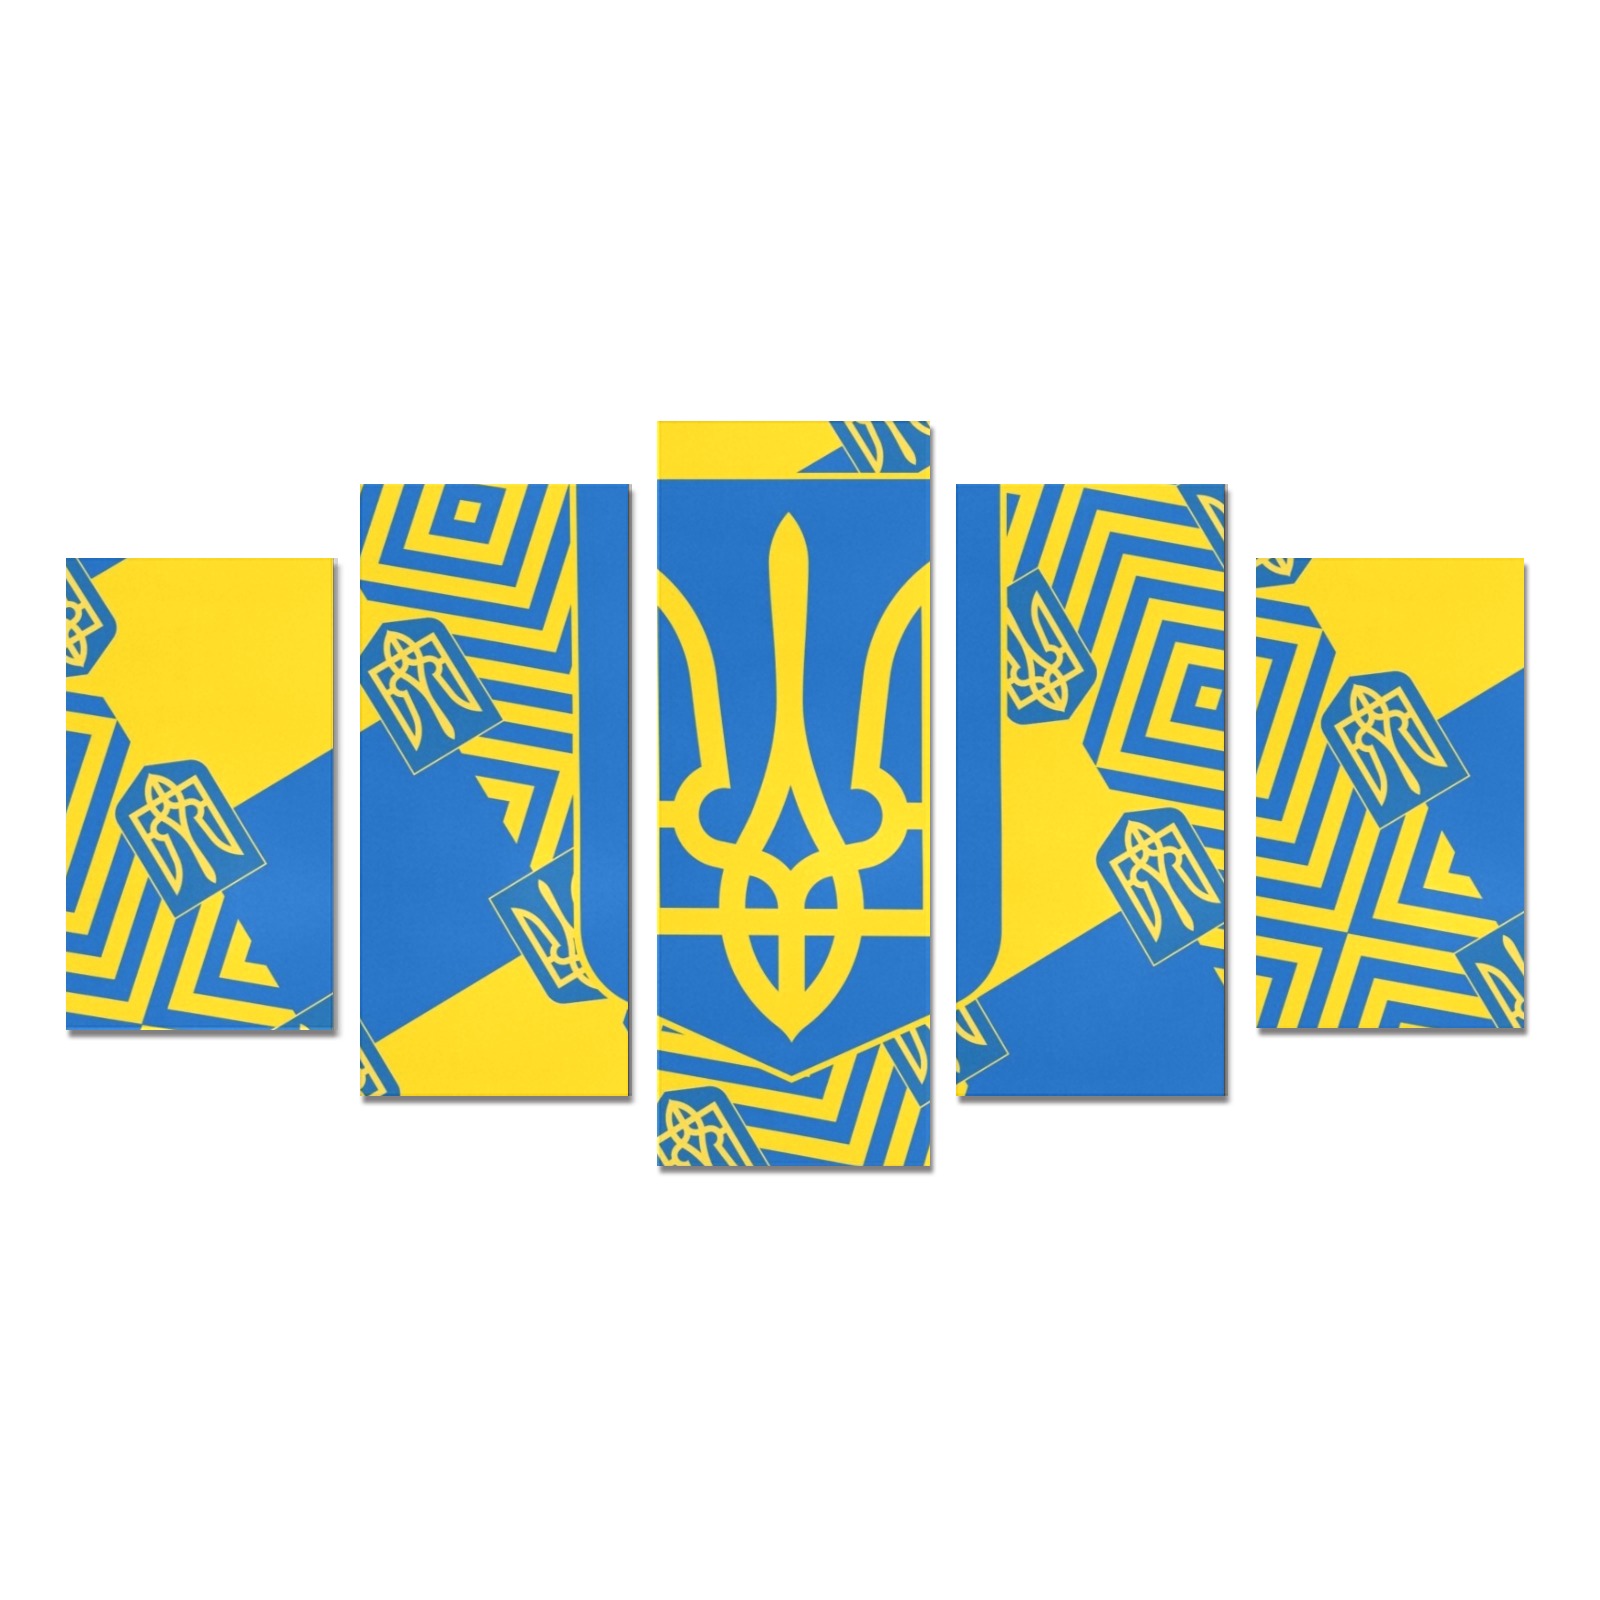 UKRAINE 2 Canvas Print Sets A (No Frame)